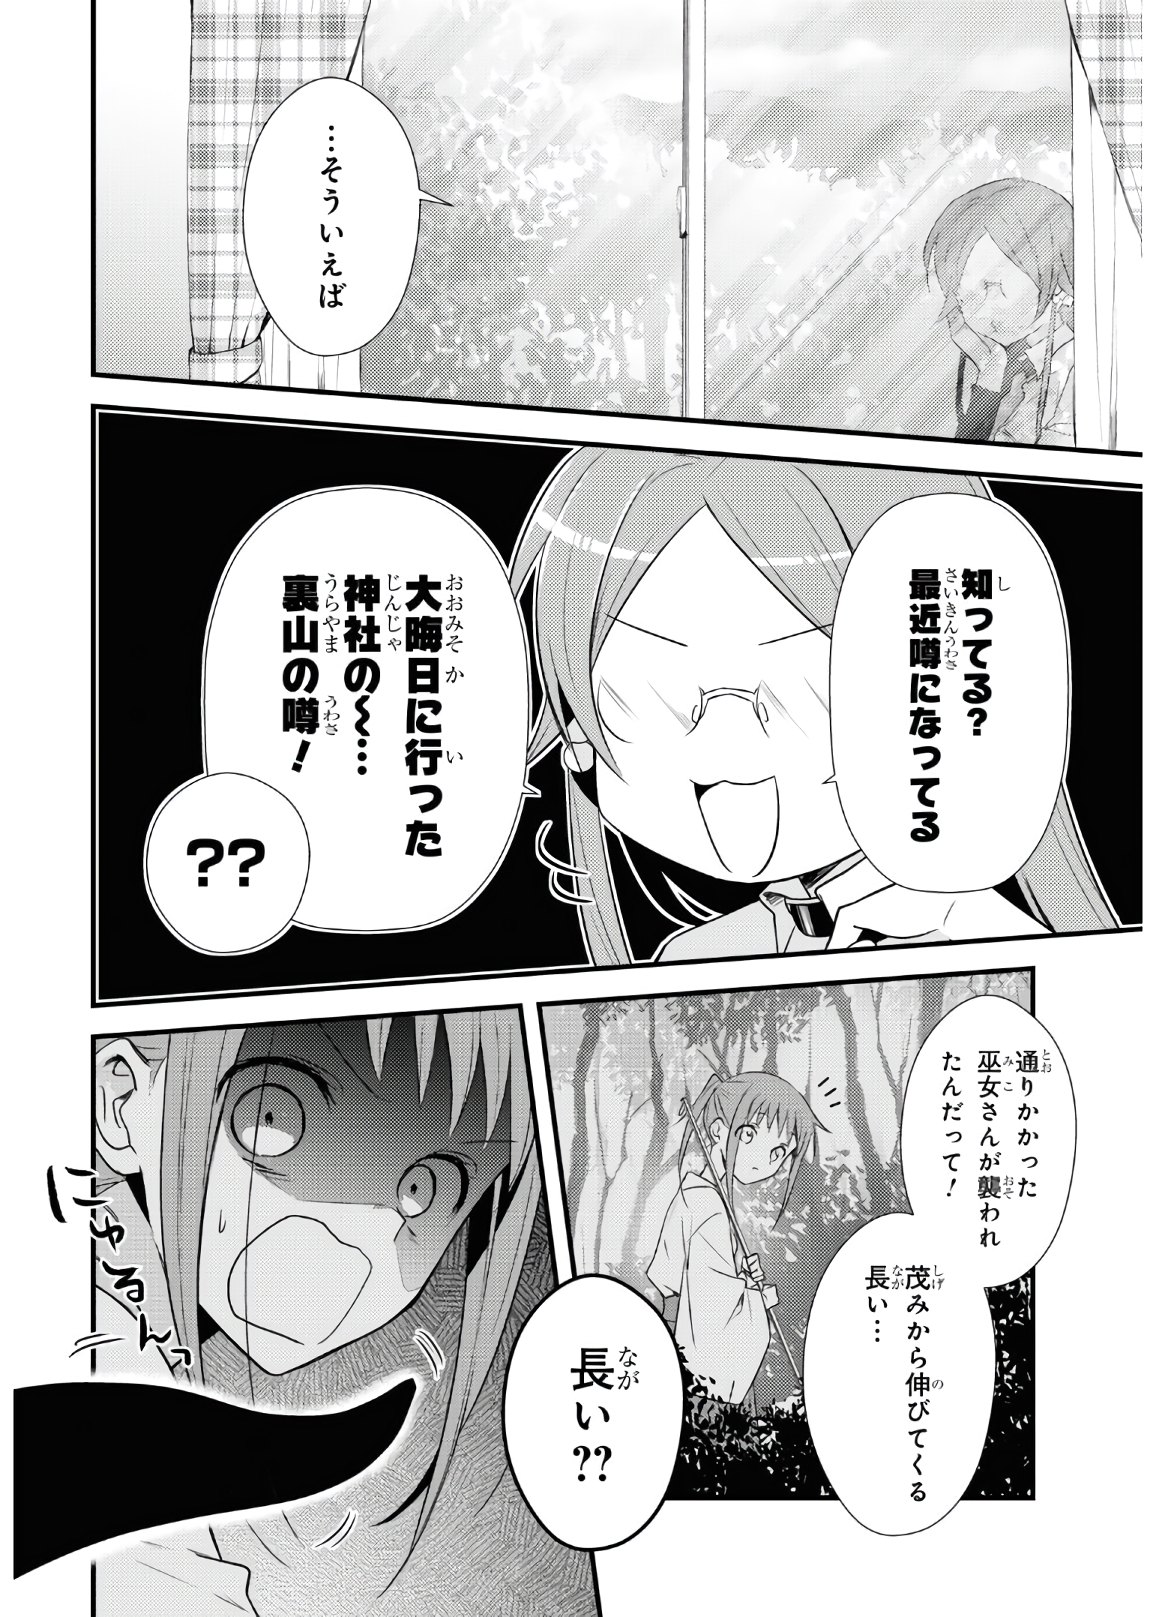 Megami-ryou no Ryoubo-kun - Chapter 37 - Page 2